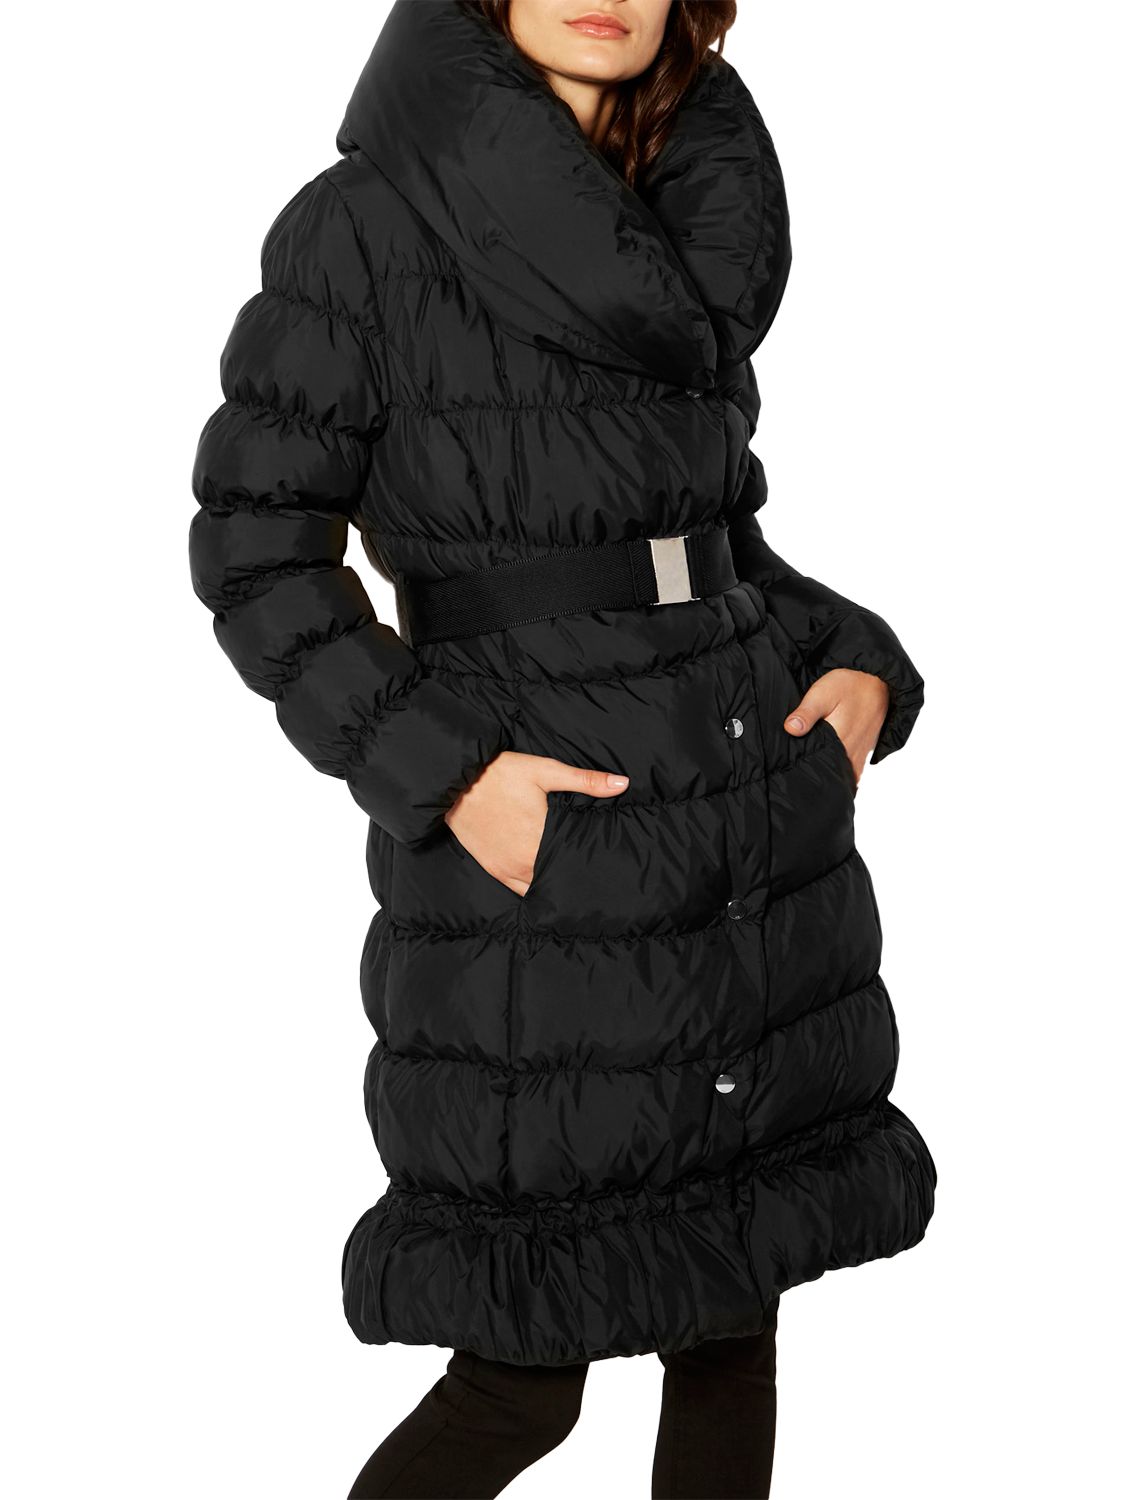 Karen Millen Feather Filled Puffer Coat, Black, 6